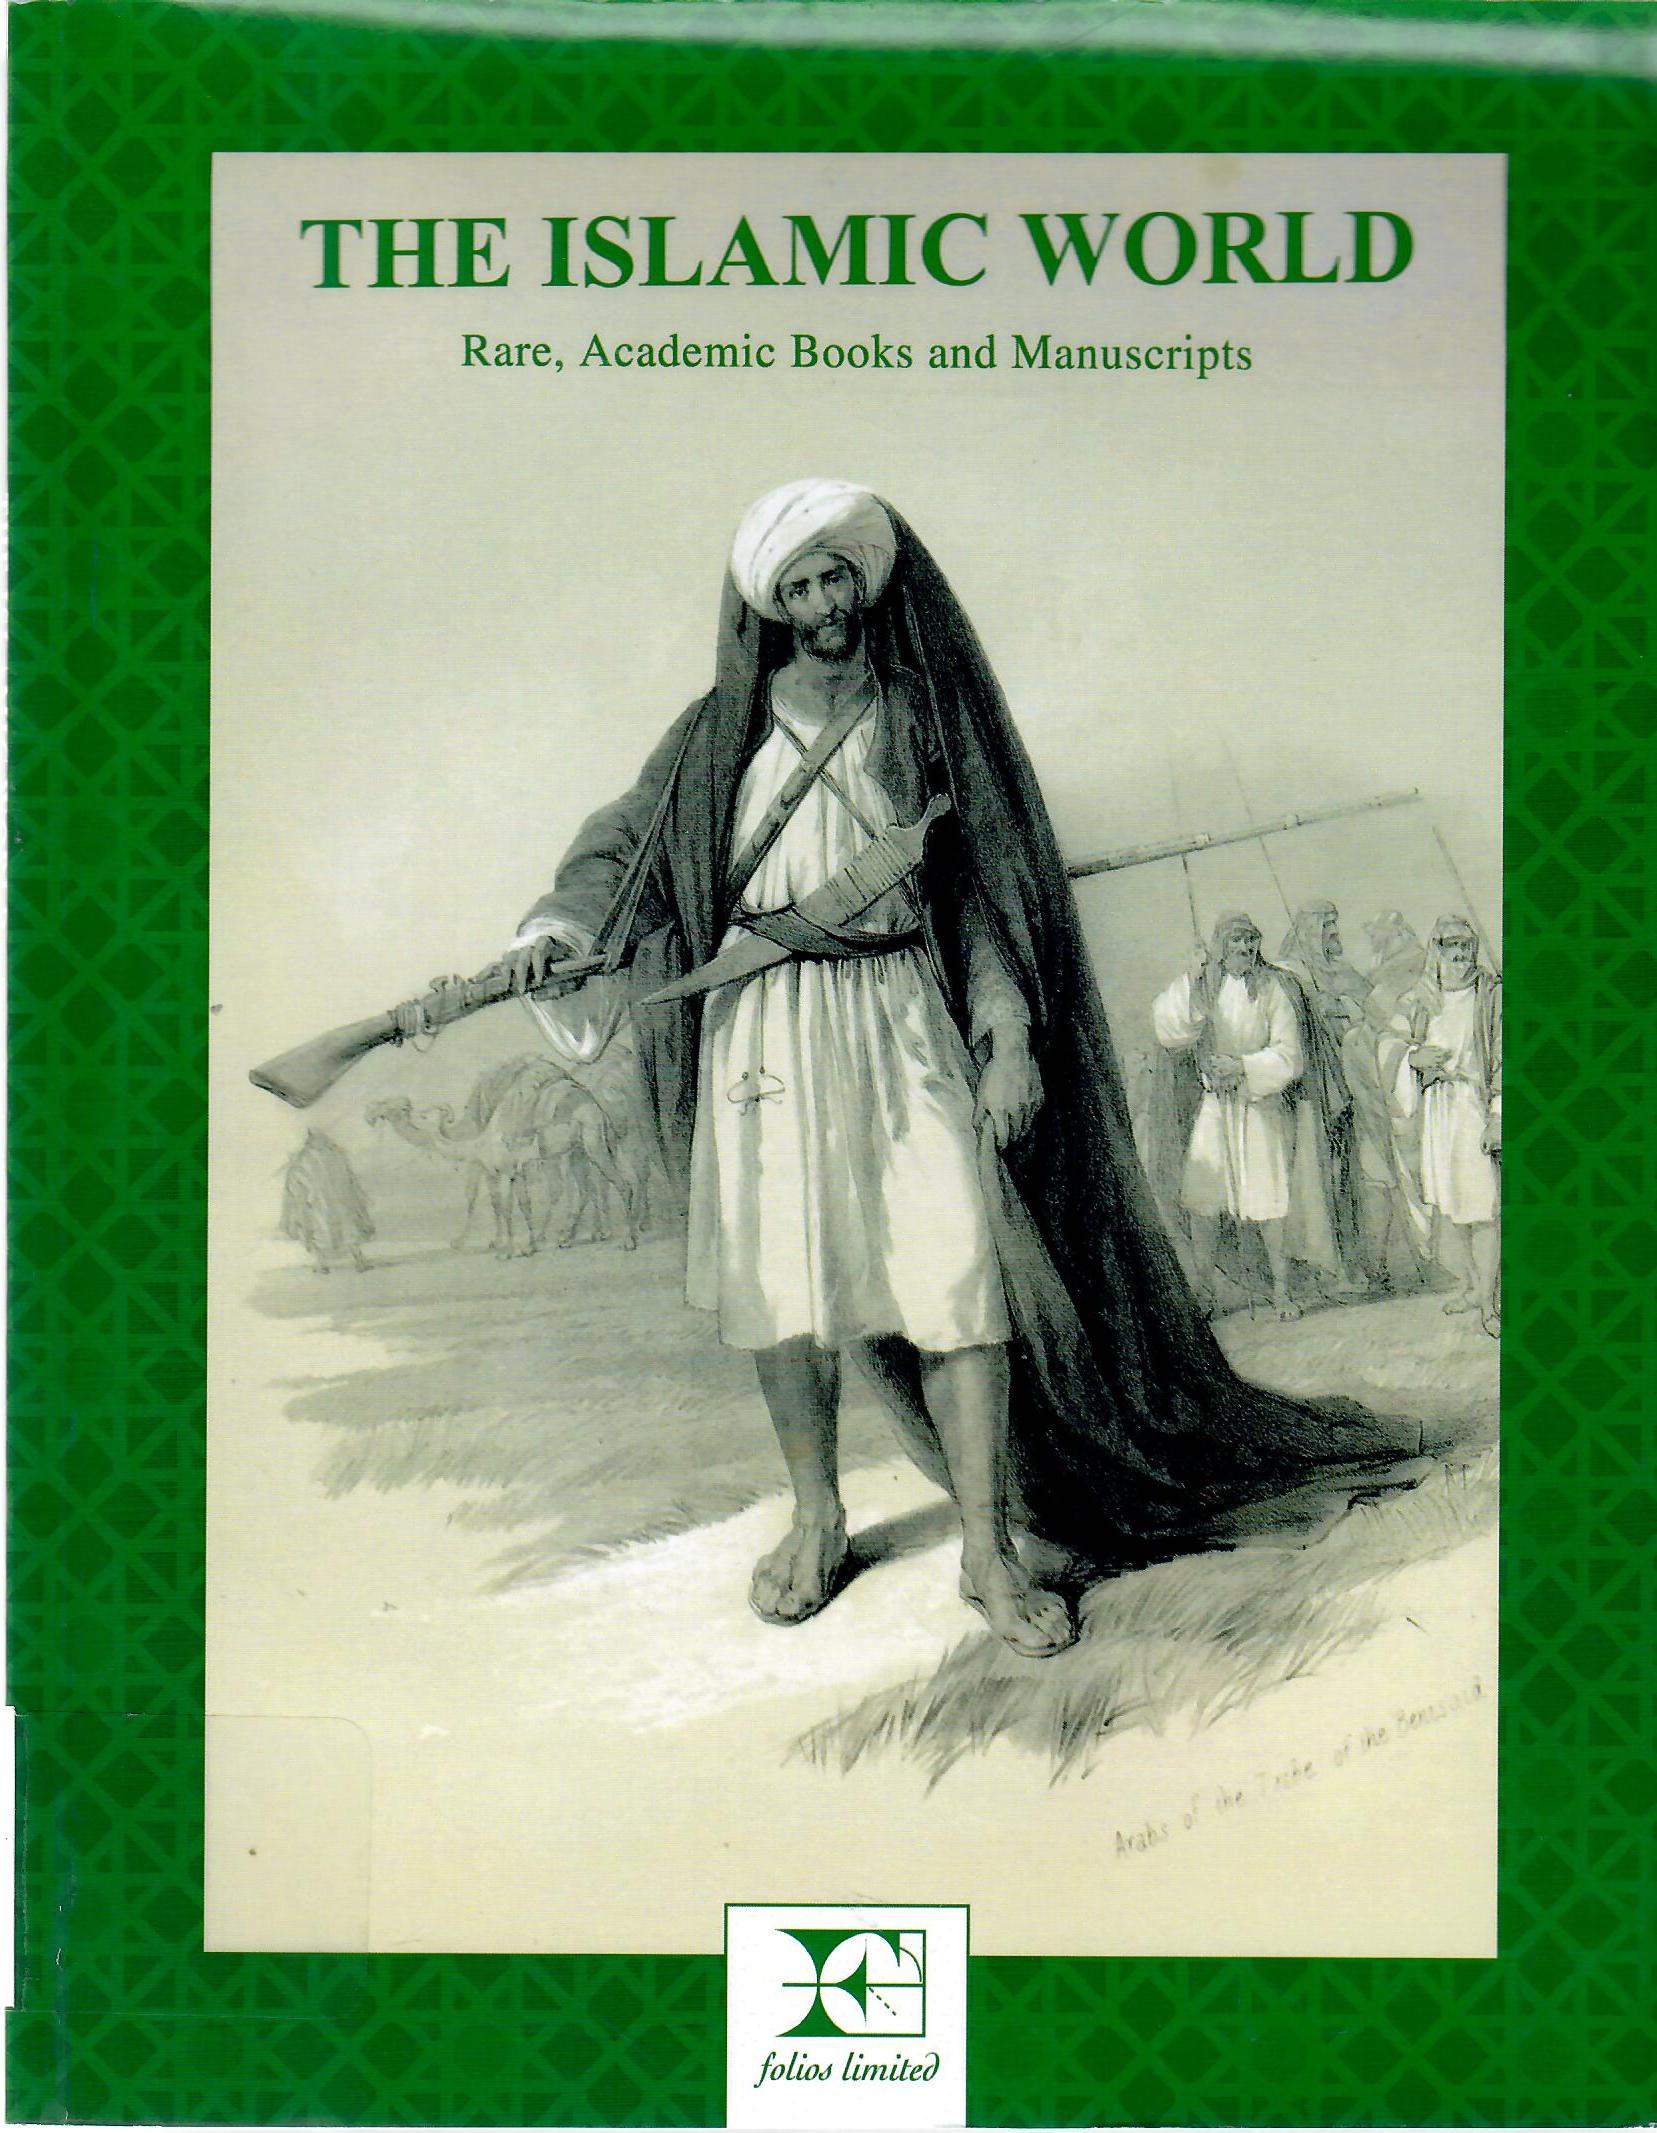 THE ISLAMIC WORLD